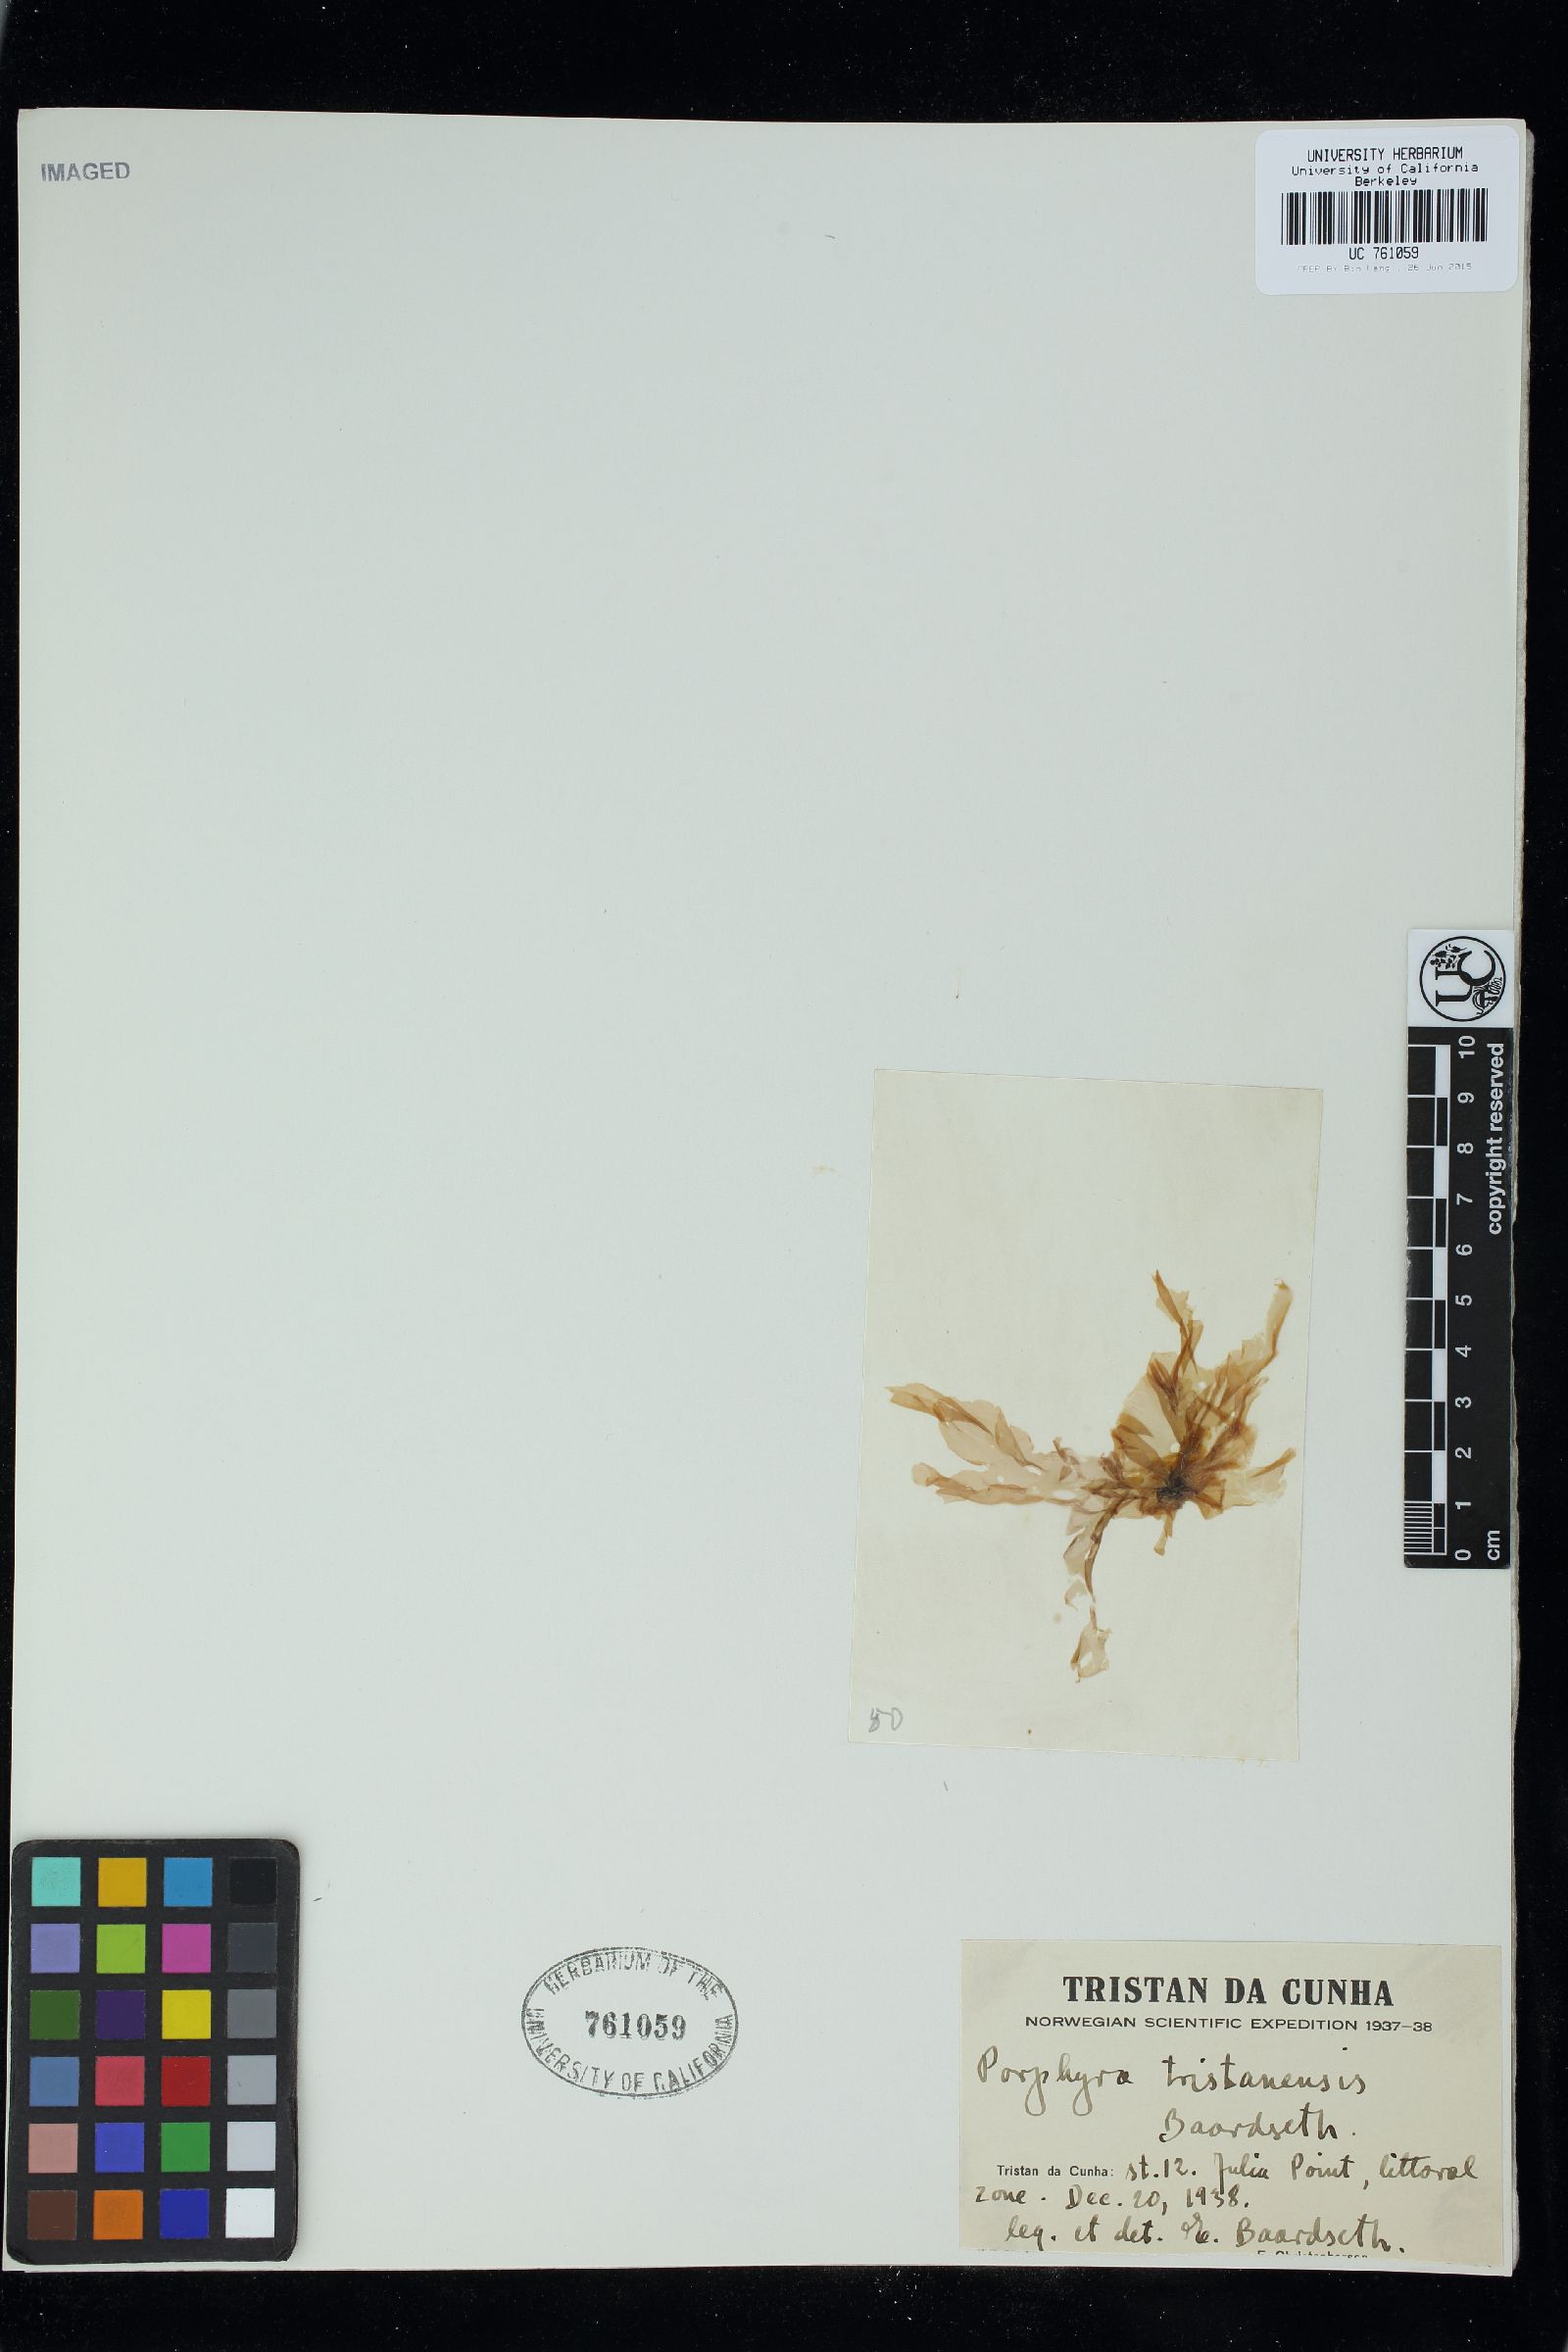 Porphyra tristanensis image